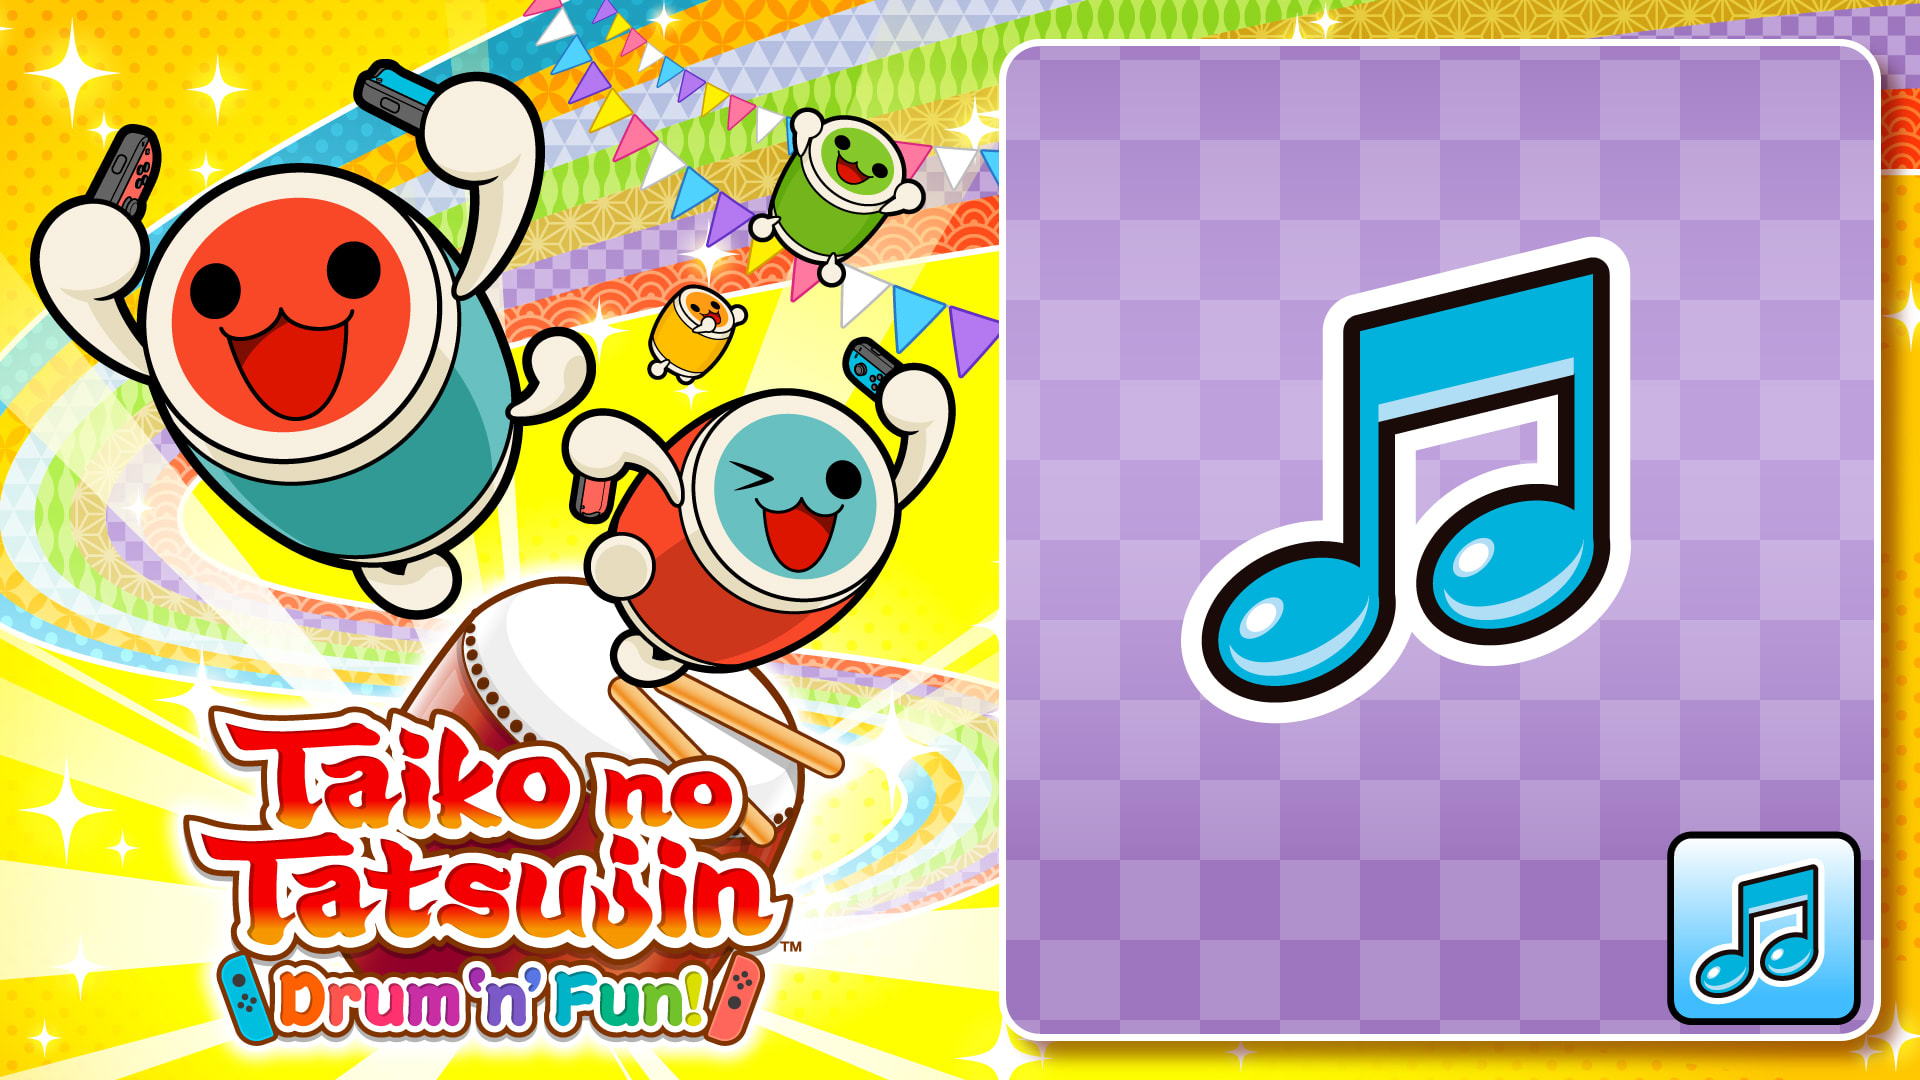 Taiko no Tatsujin: Drum 'n' Fun! "Over 1 Million Sold Celebration! I LOVE GAMES" Pack